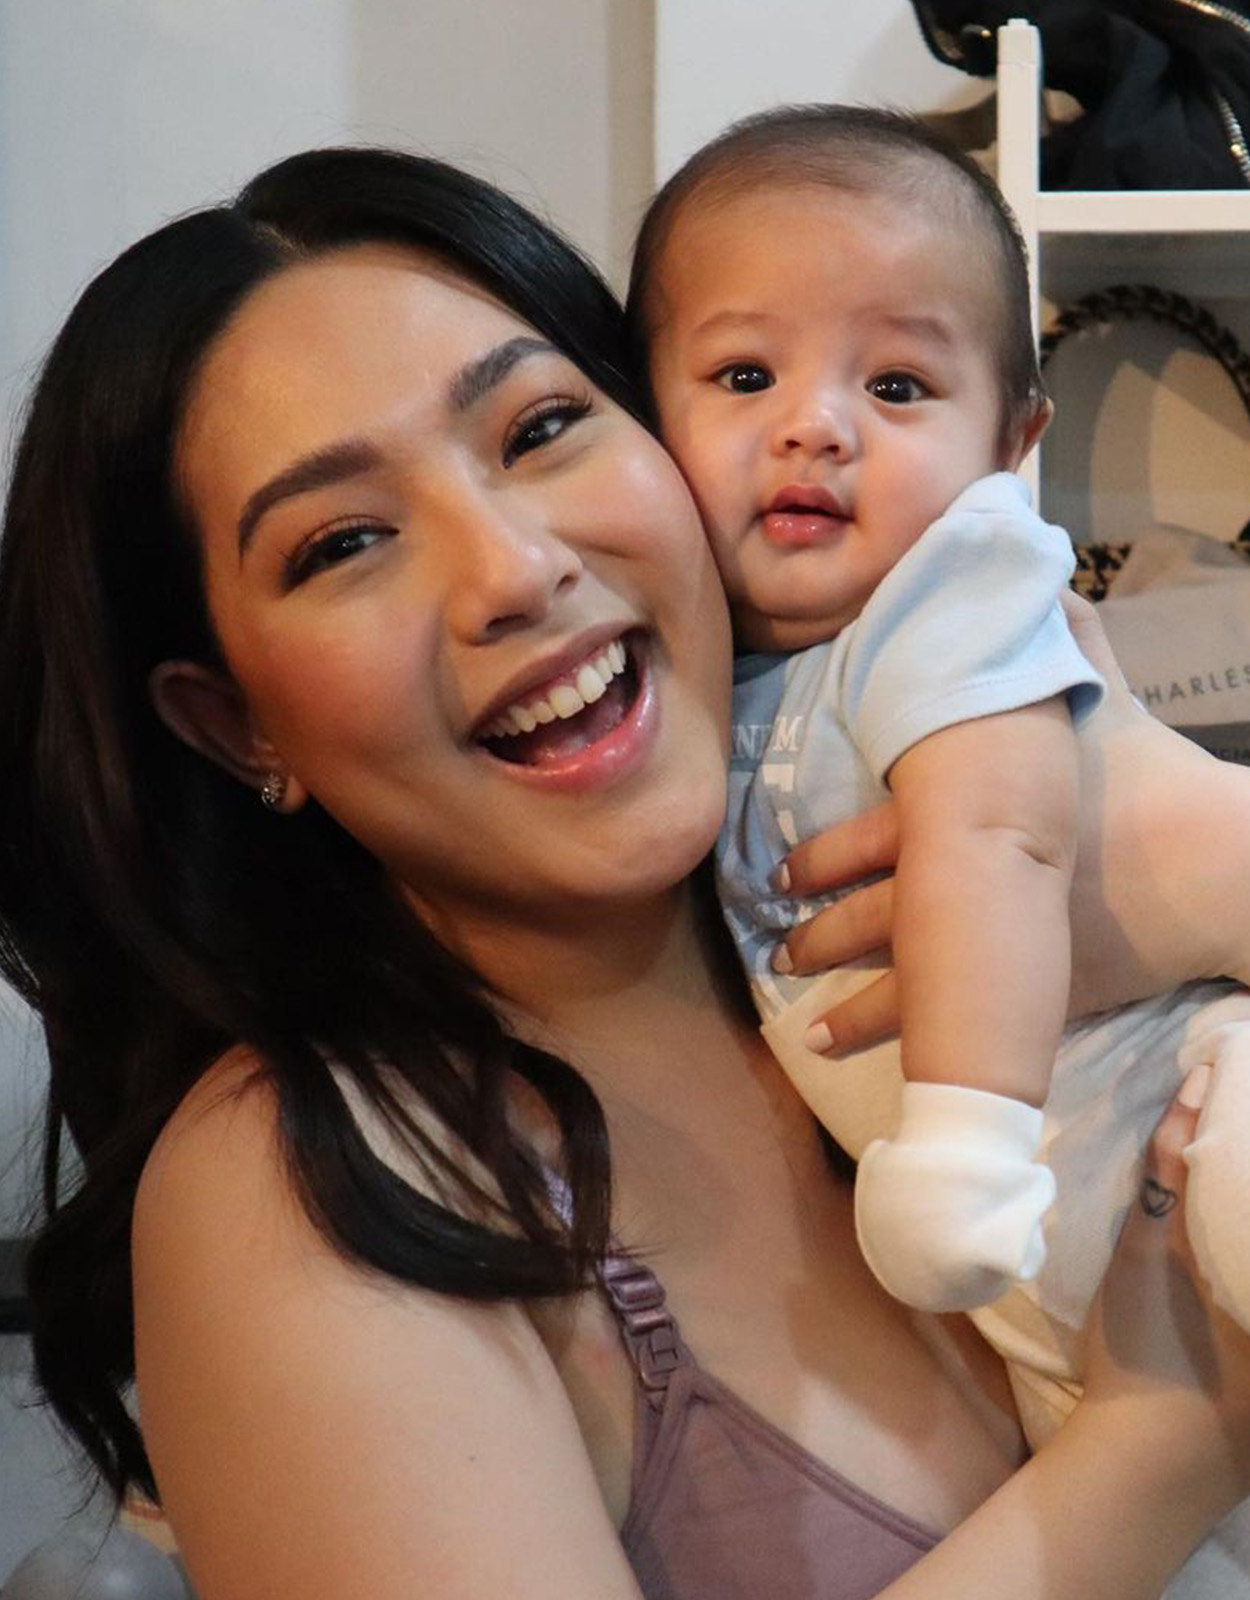 Rita Daniela on co-parenting her baby